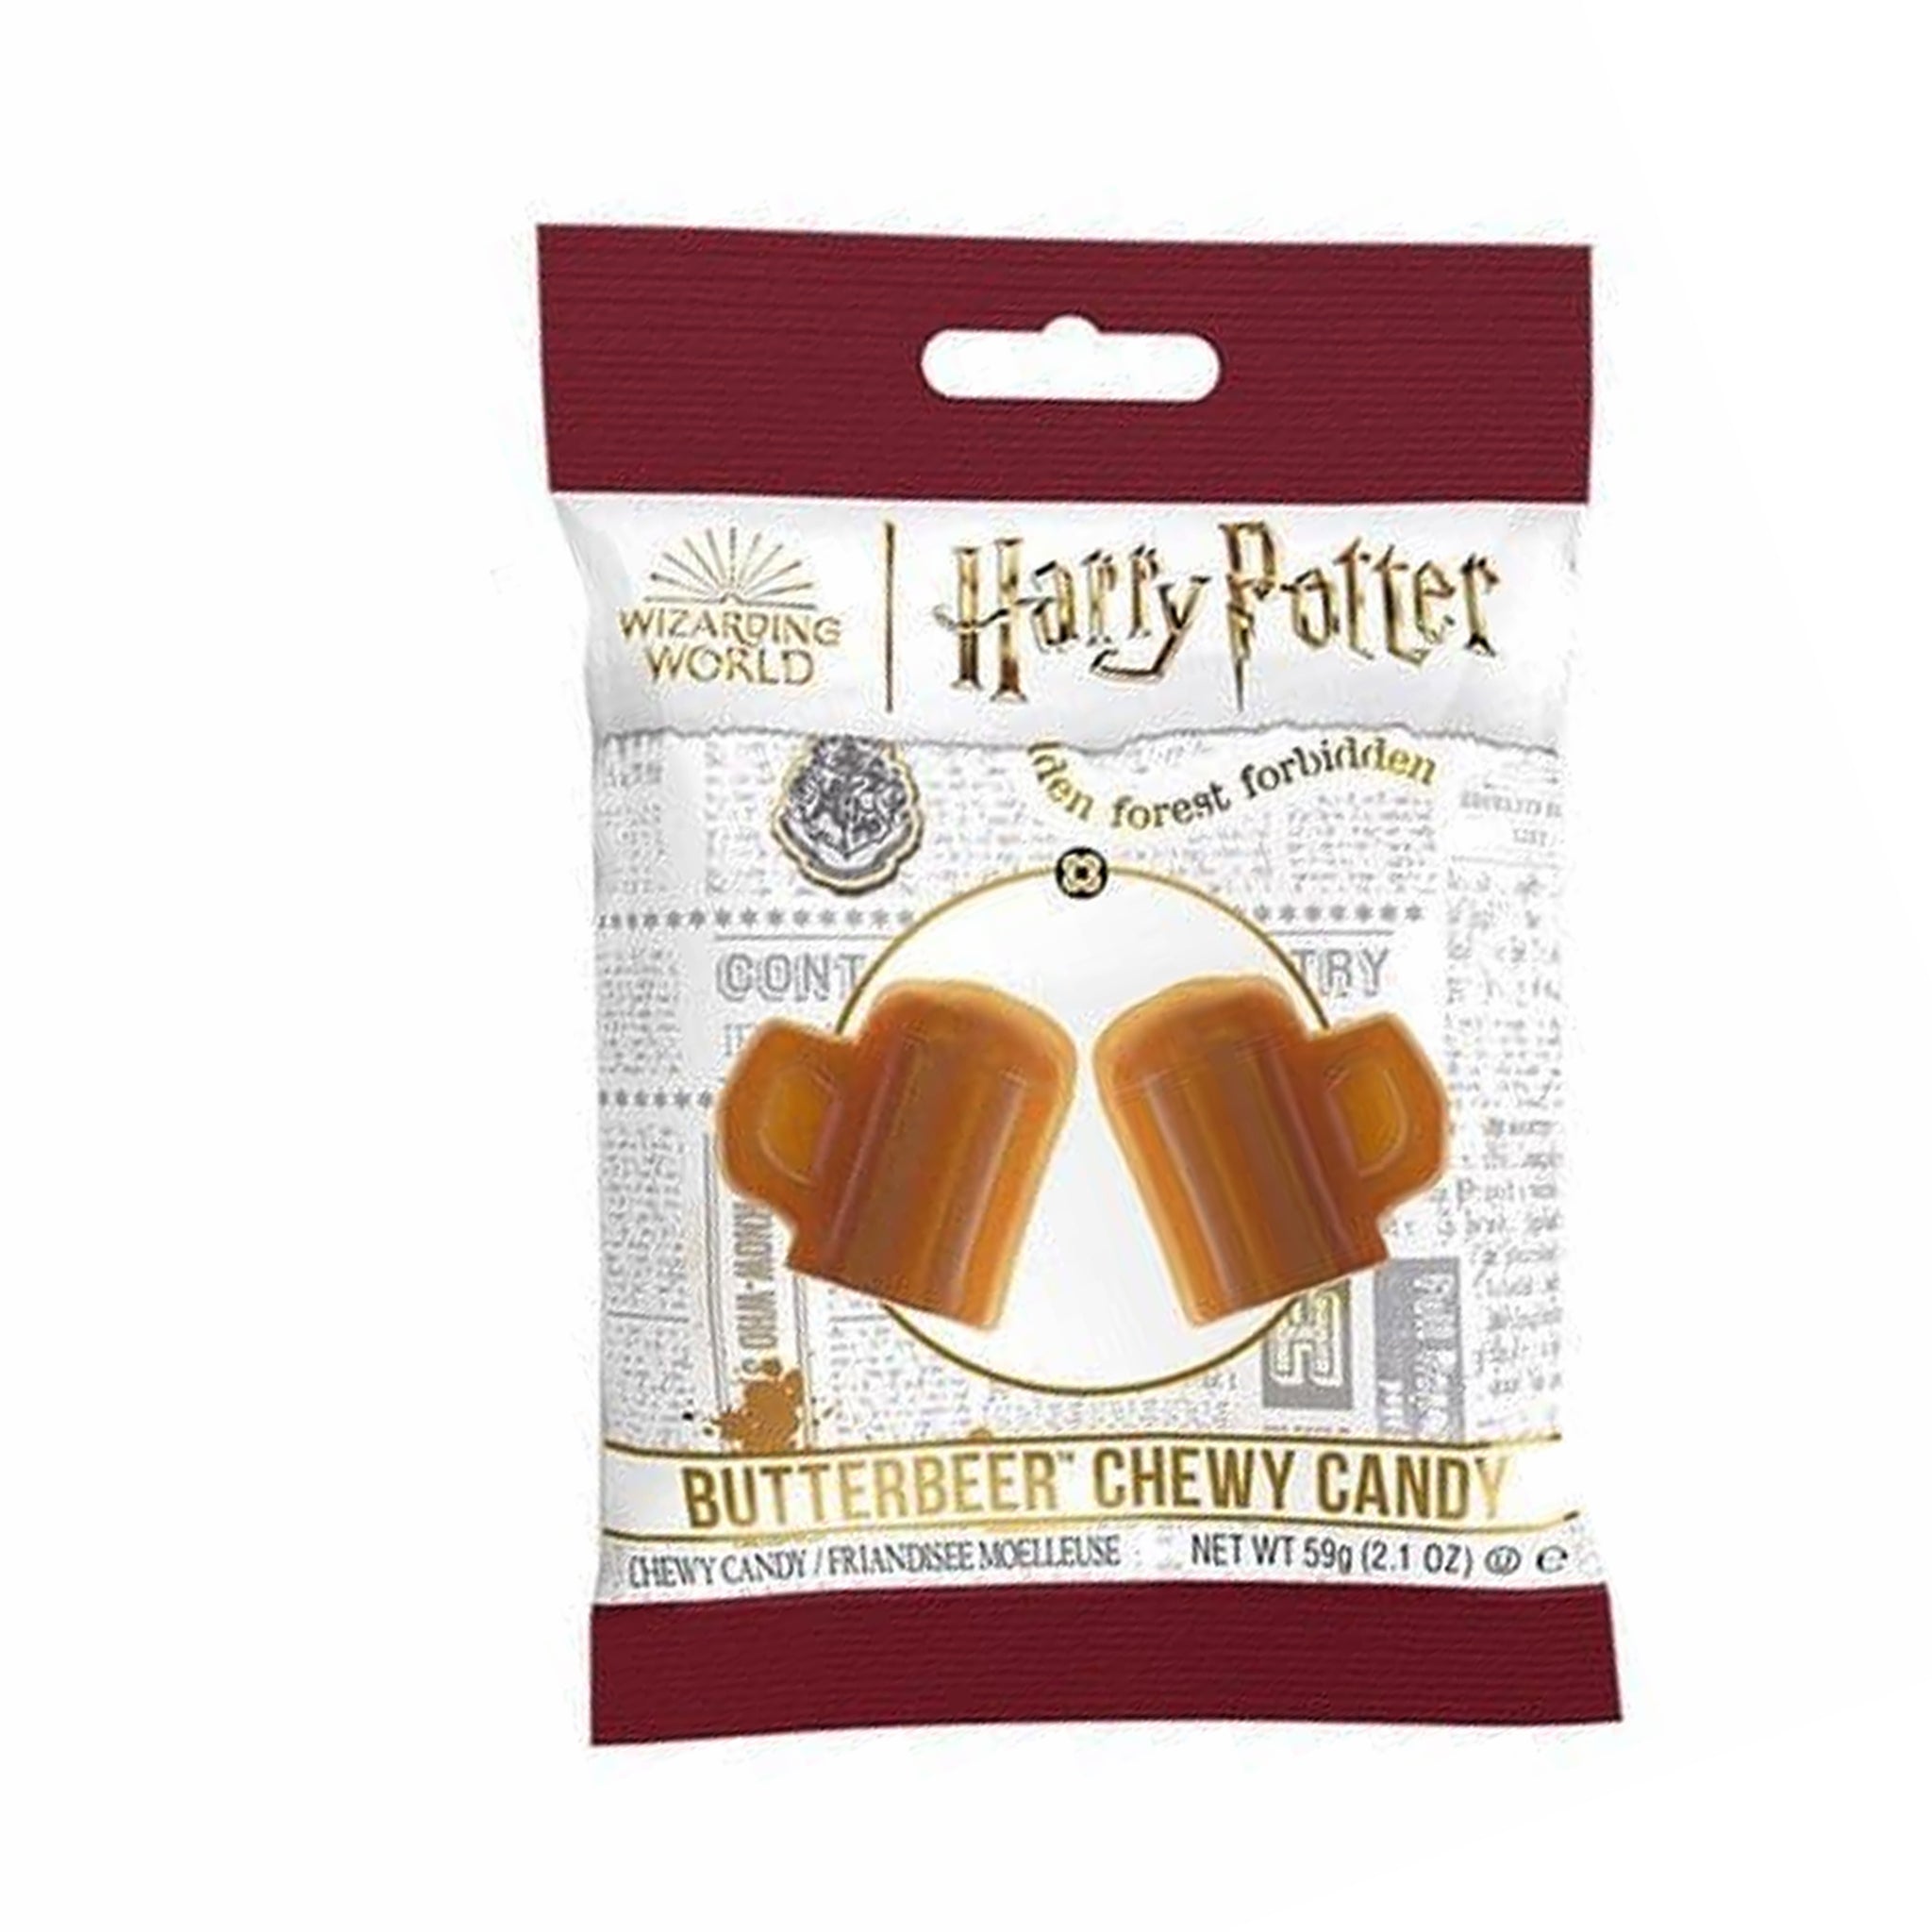 Harry Potter ButterBeer Chewy Candies סוכריות חמאה רכות בצורת בירה הארי פוטר